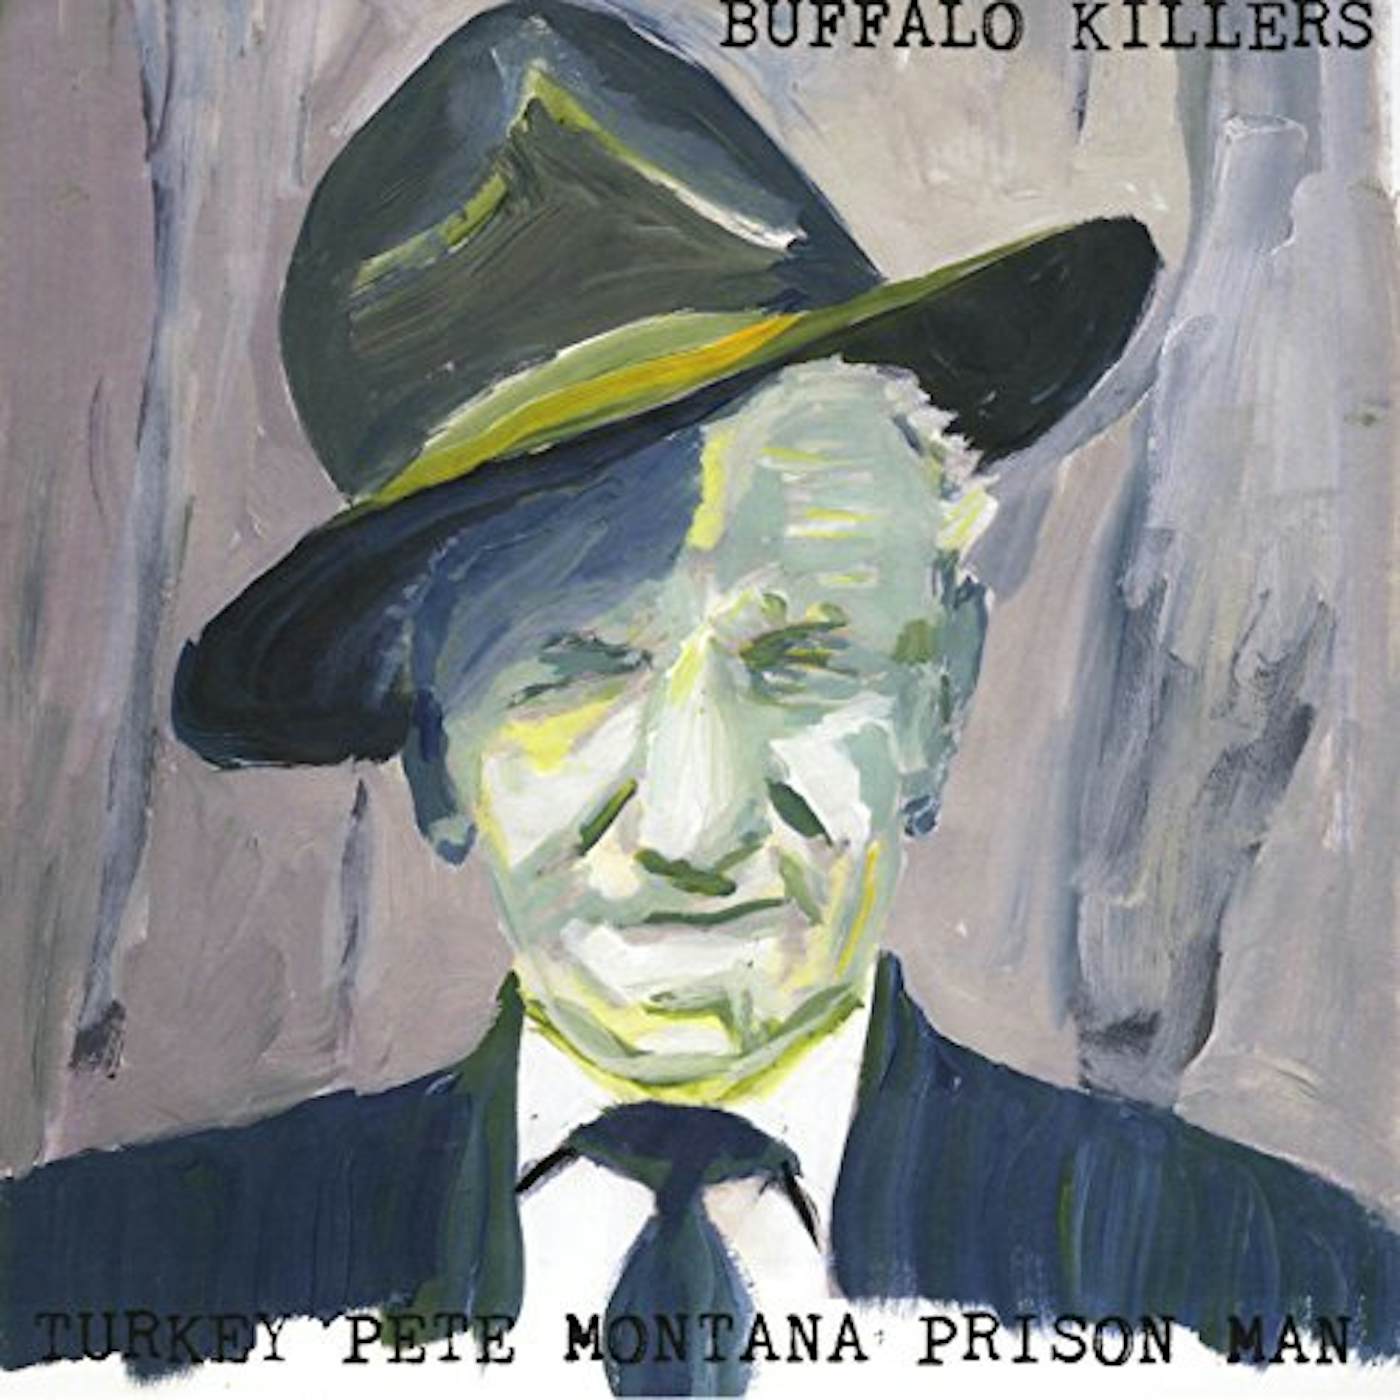 Ampline / Buffalo Killers IT WILL EVAPORATE / TURKEY PETE MONTANA PRISON MAN Vinyl Record